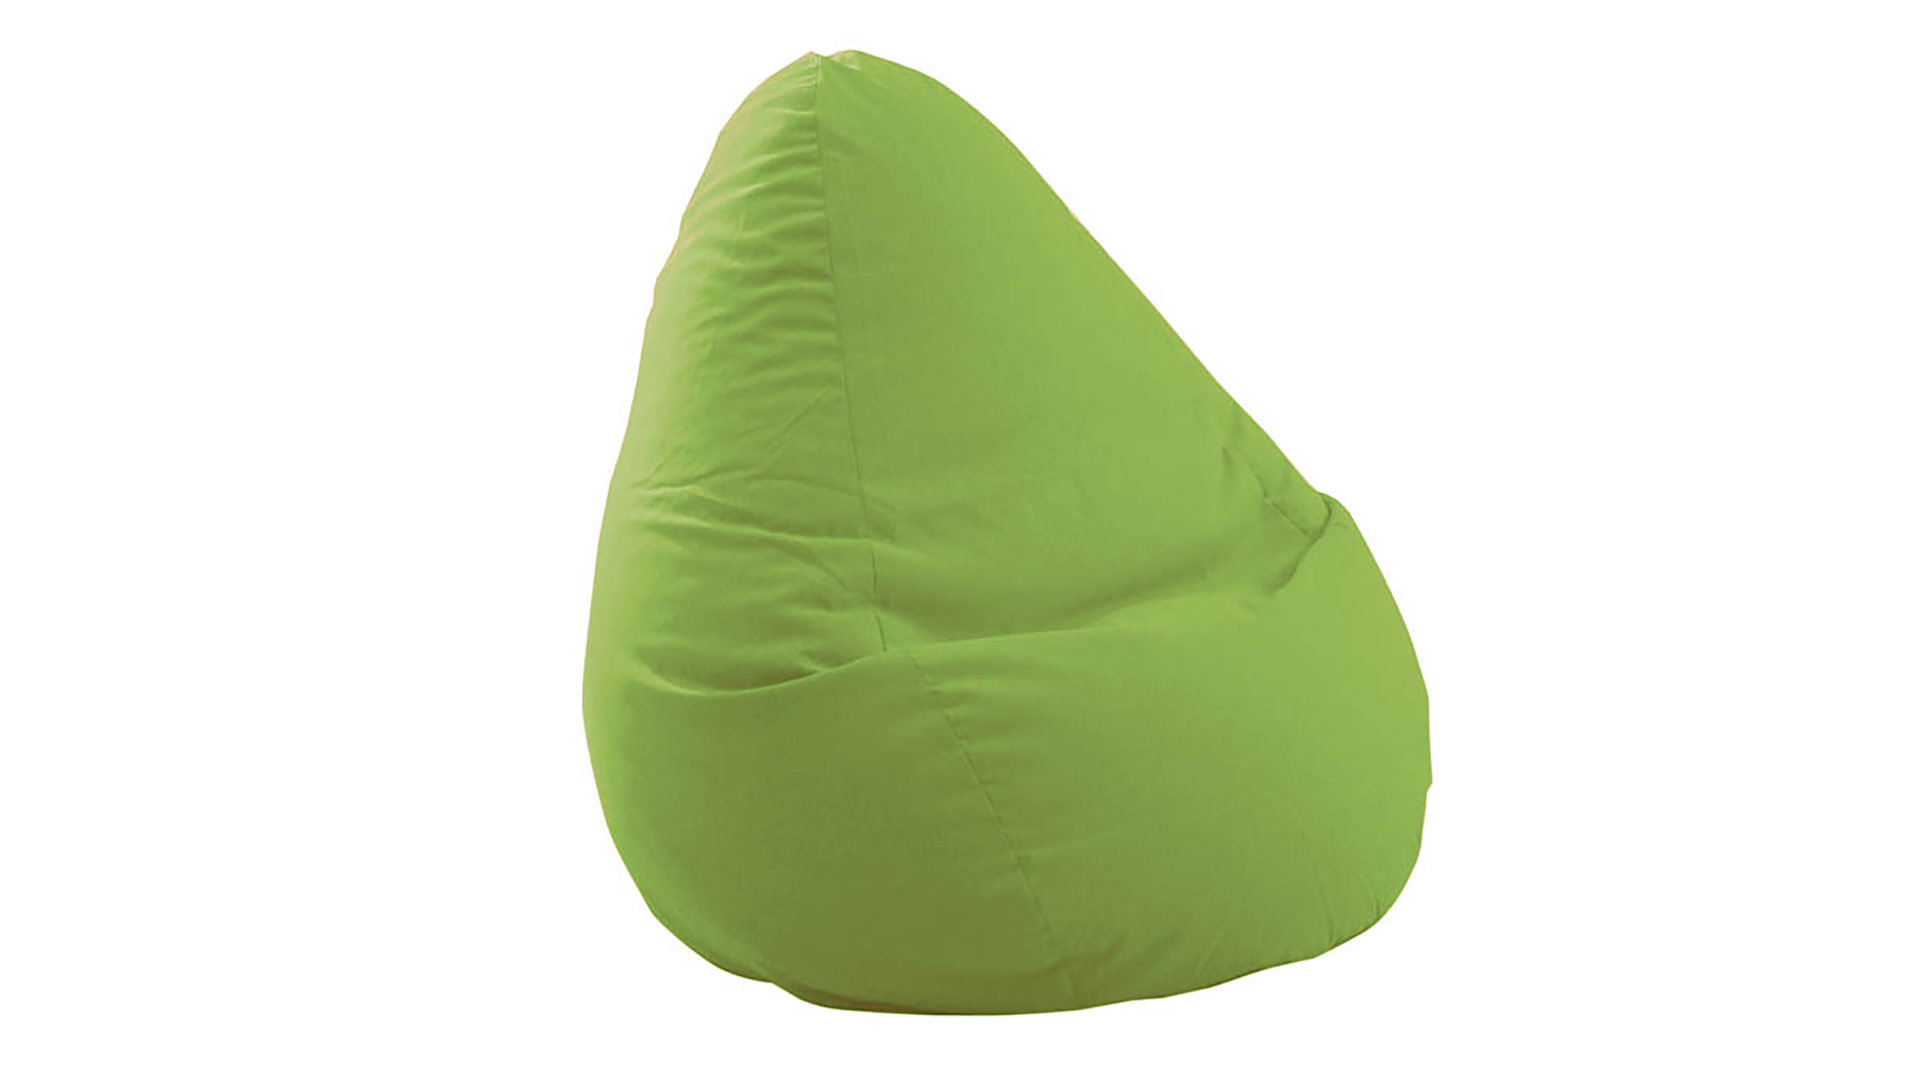 Standard-Sitzsack Magma sitting point aus Stoff in Grün SITTING POINT Sitzsack Easy L als Sitzmöbel grüner Mikrofaserbezug - ca. 120 Liter